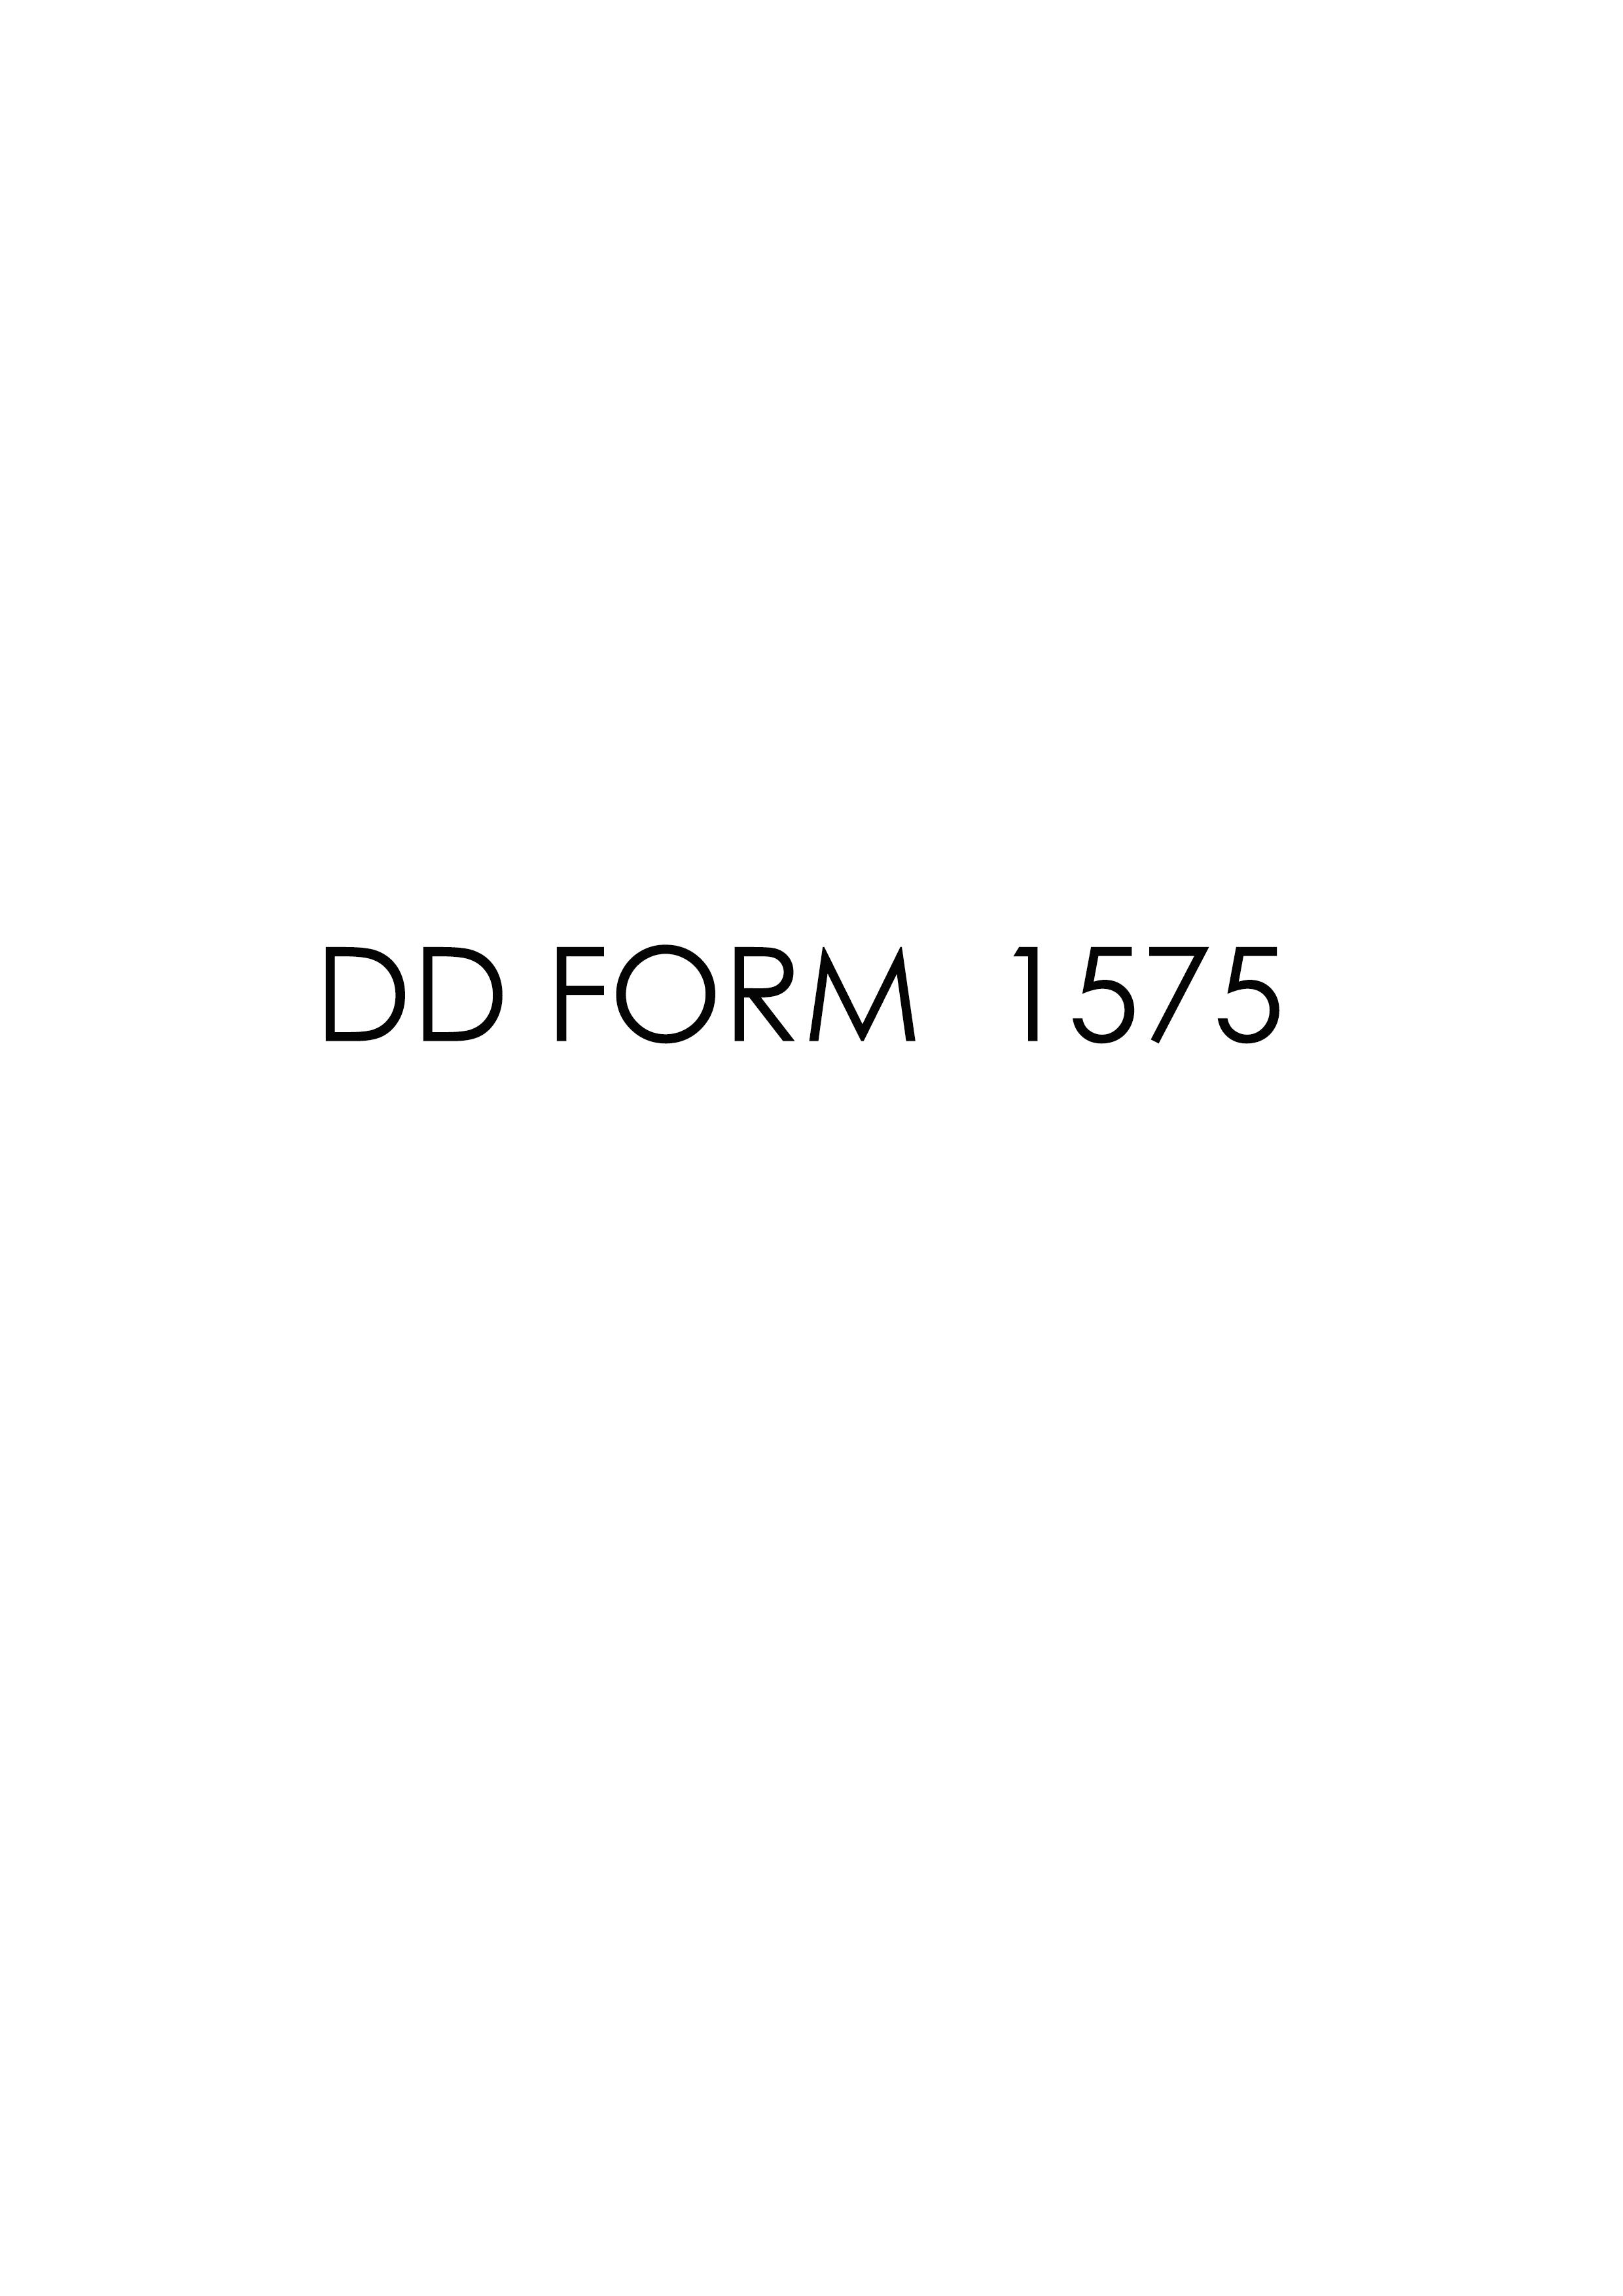 Download dd form 1575